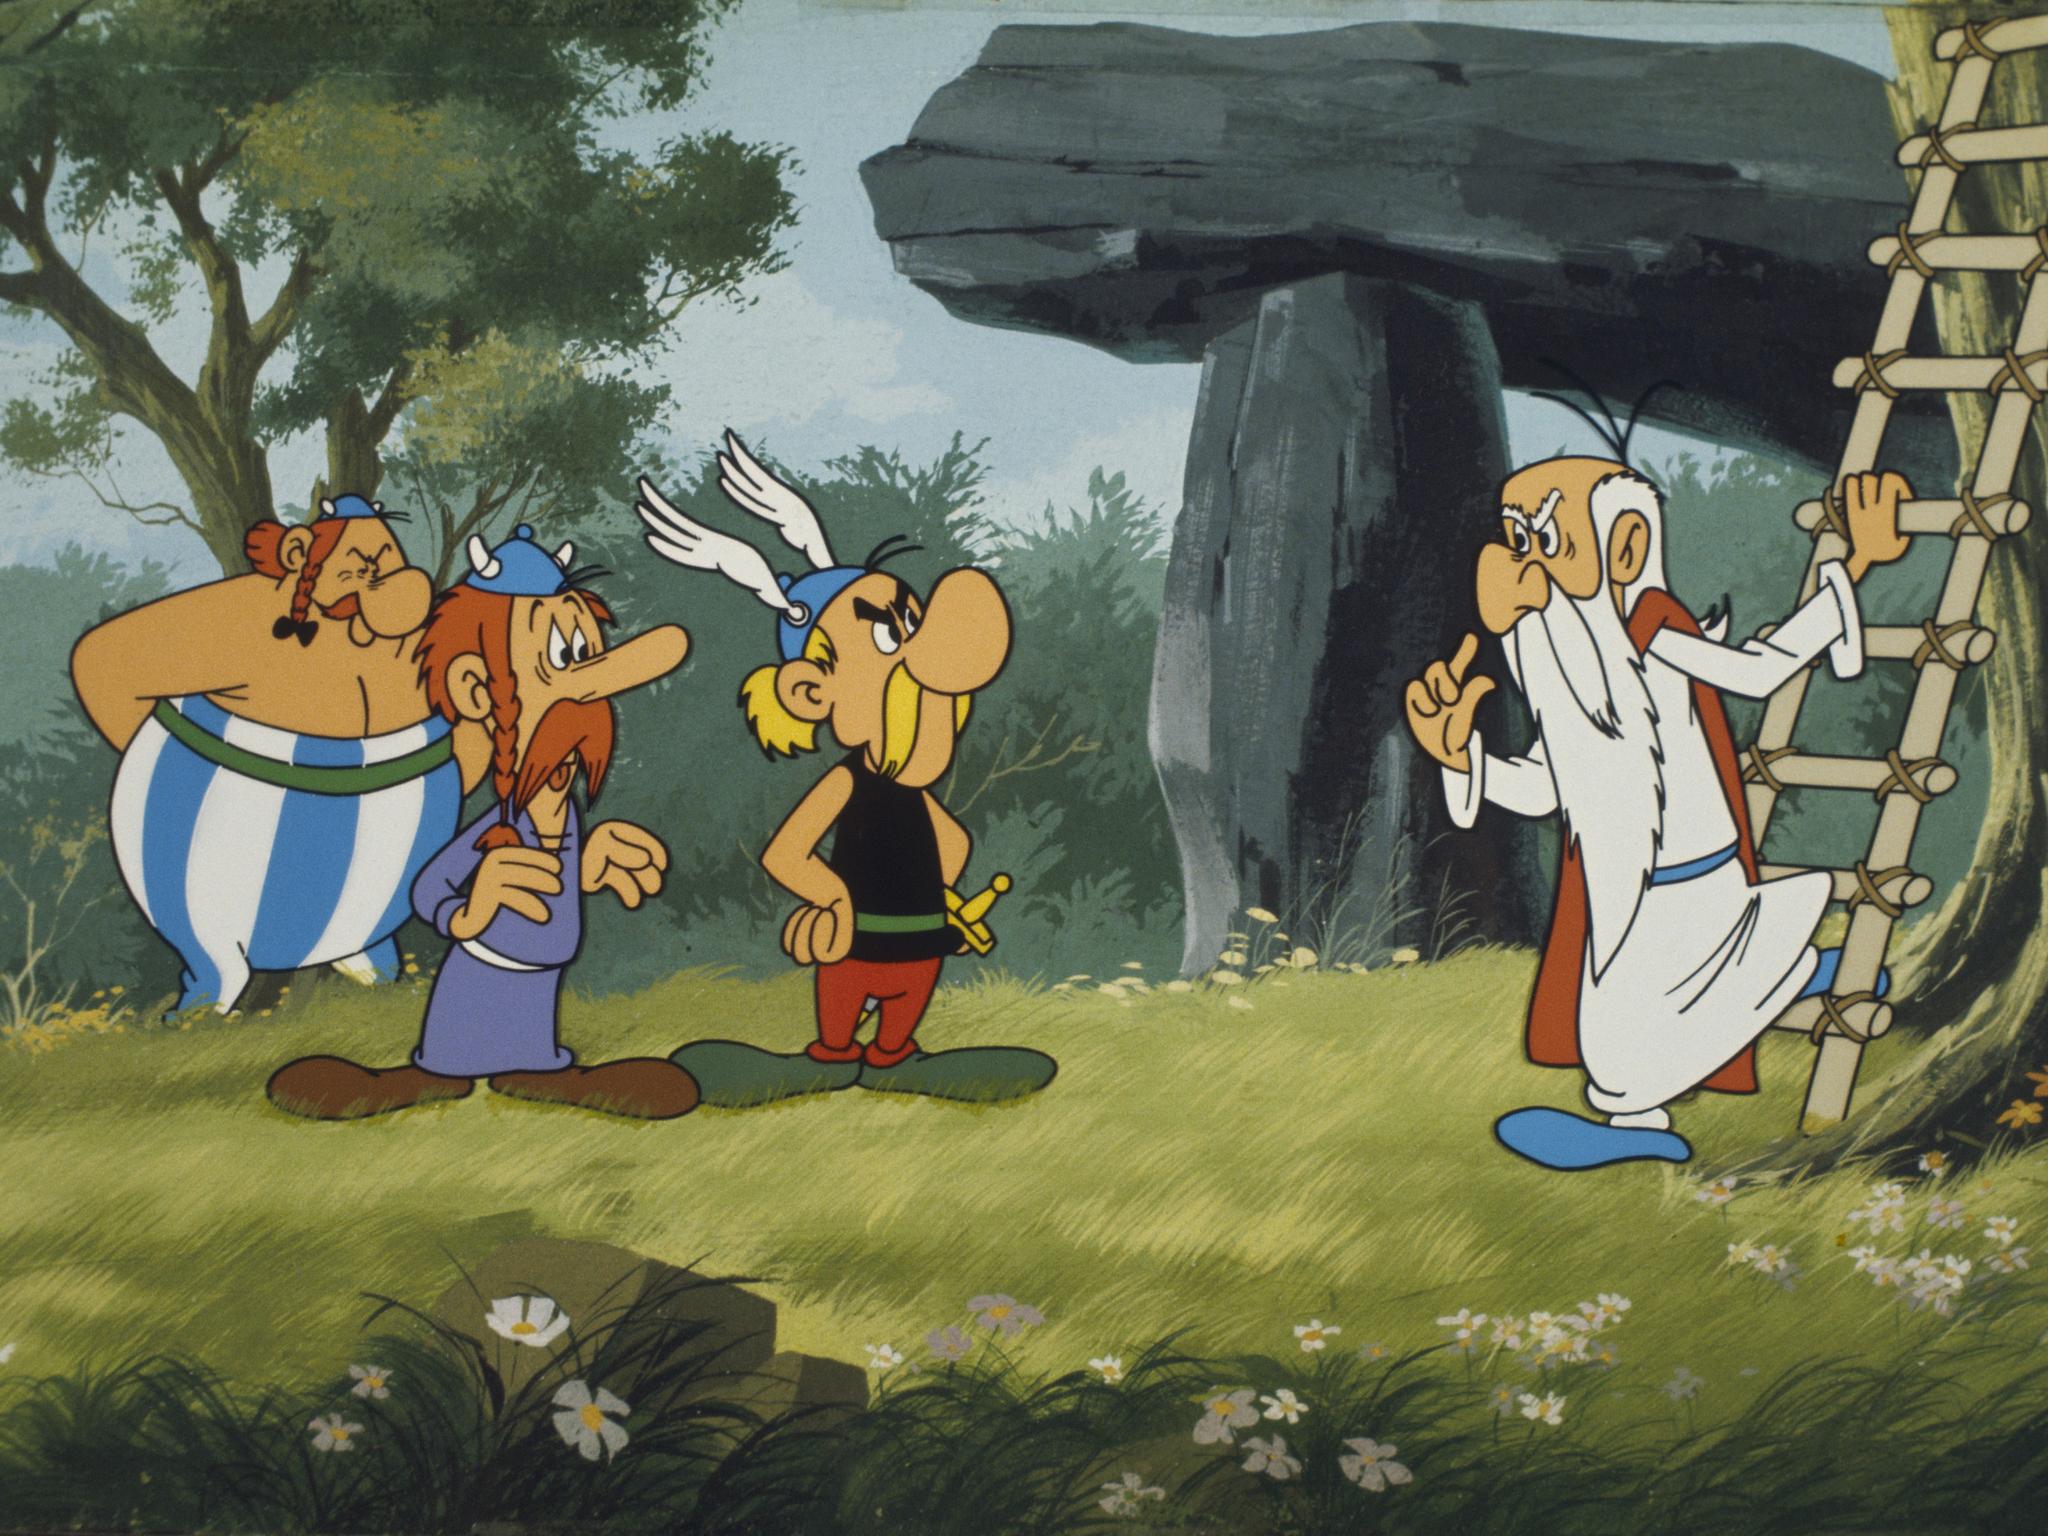 Asterix exhibition: The indomitable Gaul who restored France's postwar pride